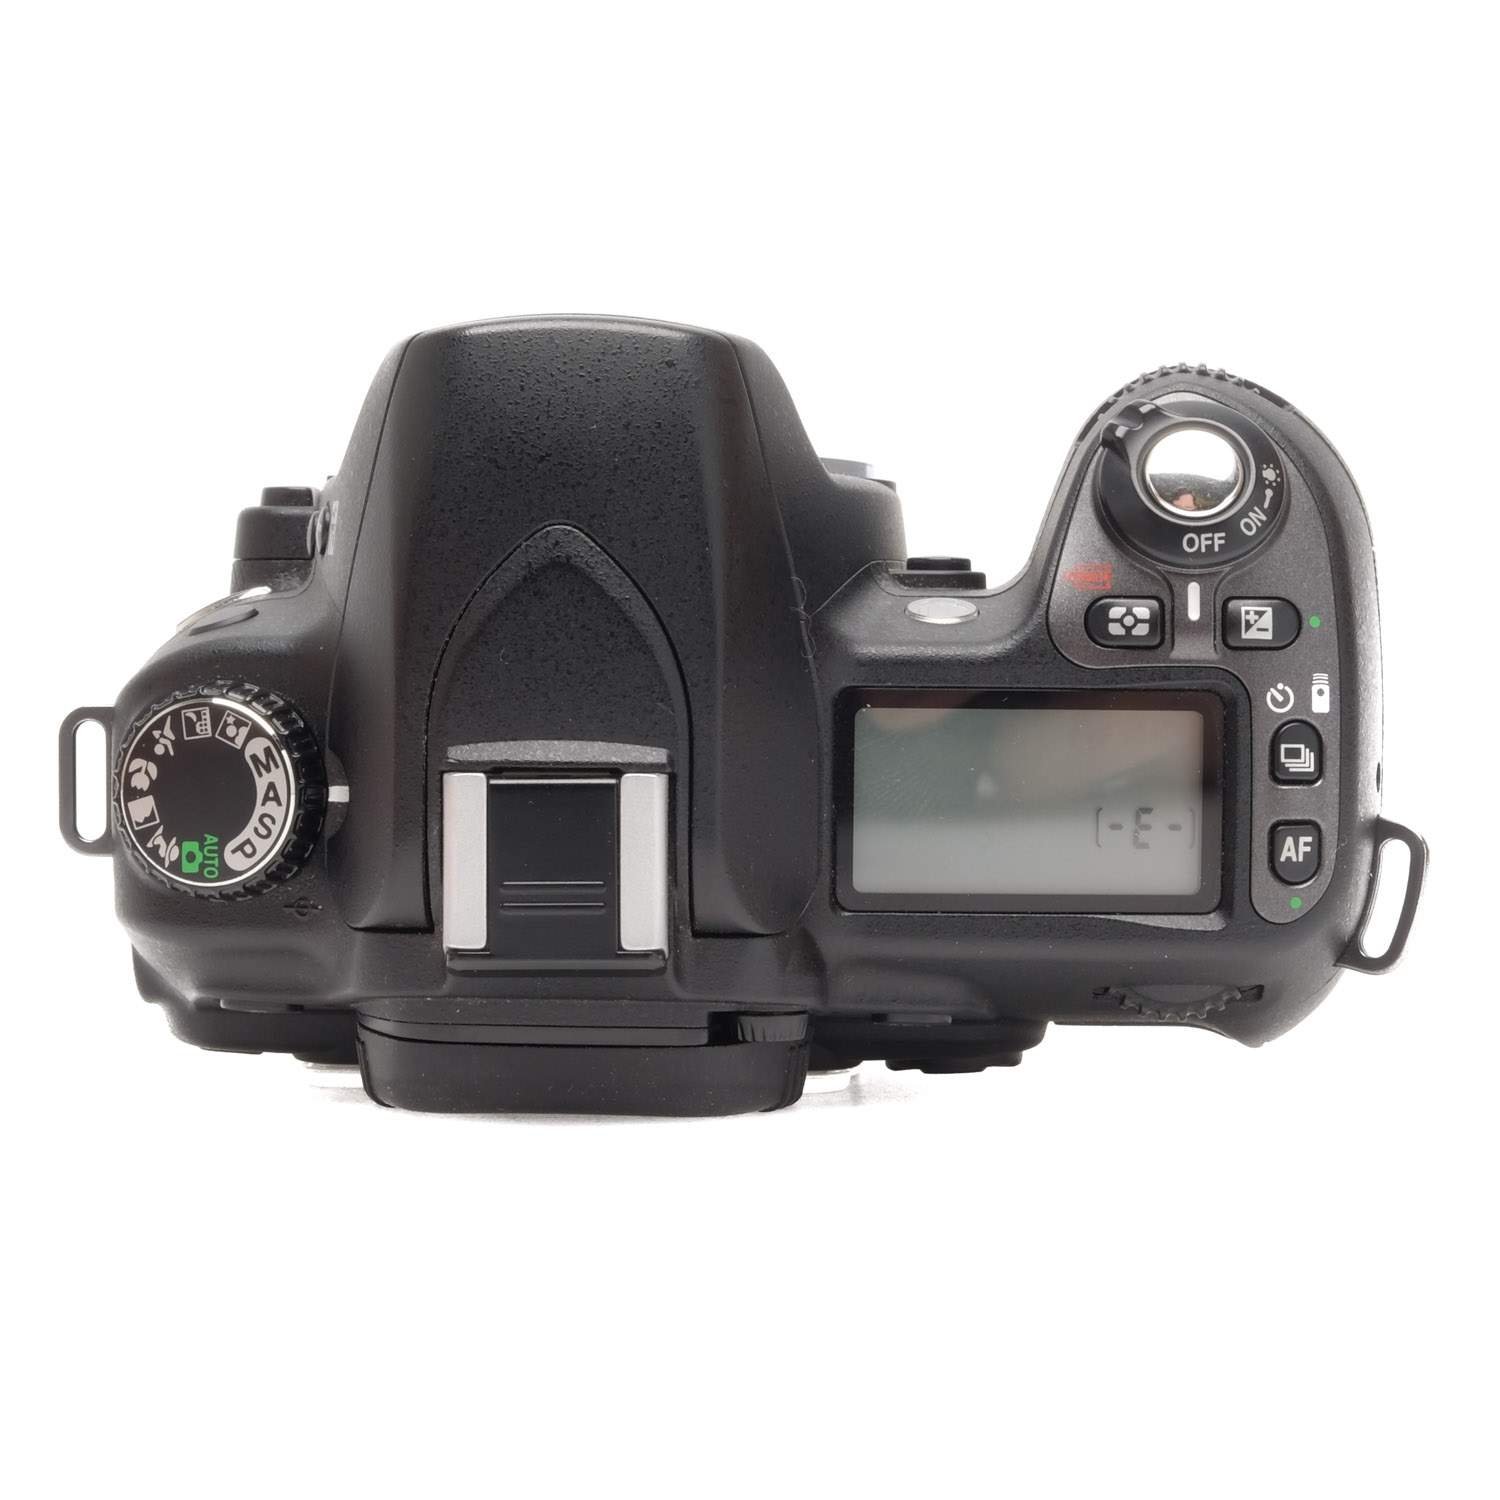 Nikon D80 DSLR Camera (Body only) (OLD MODEL)